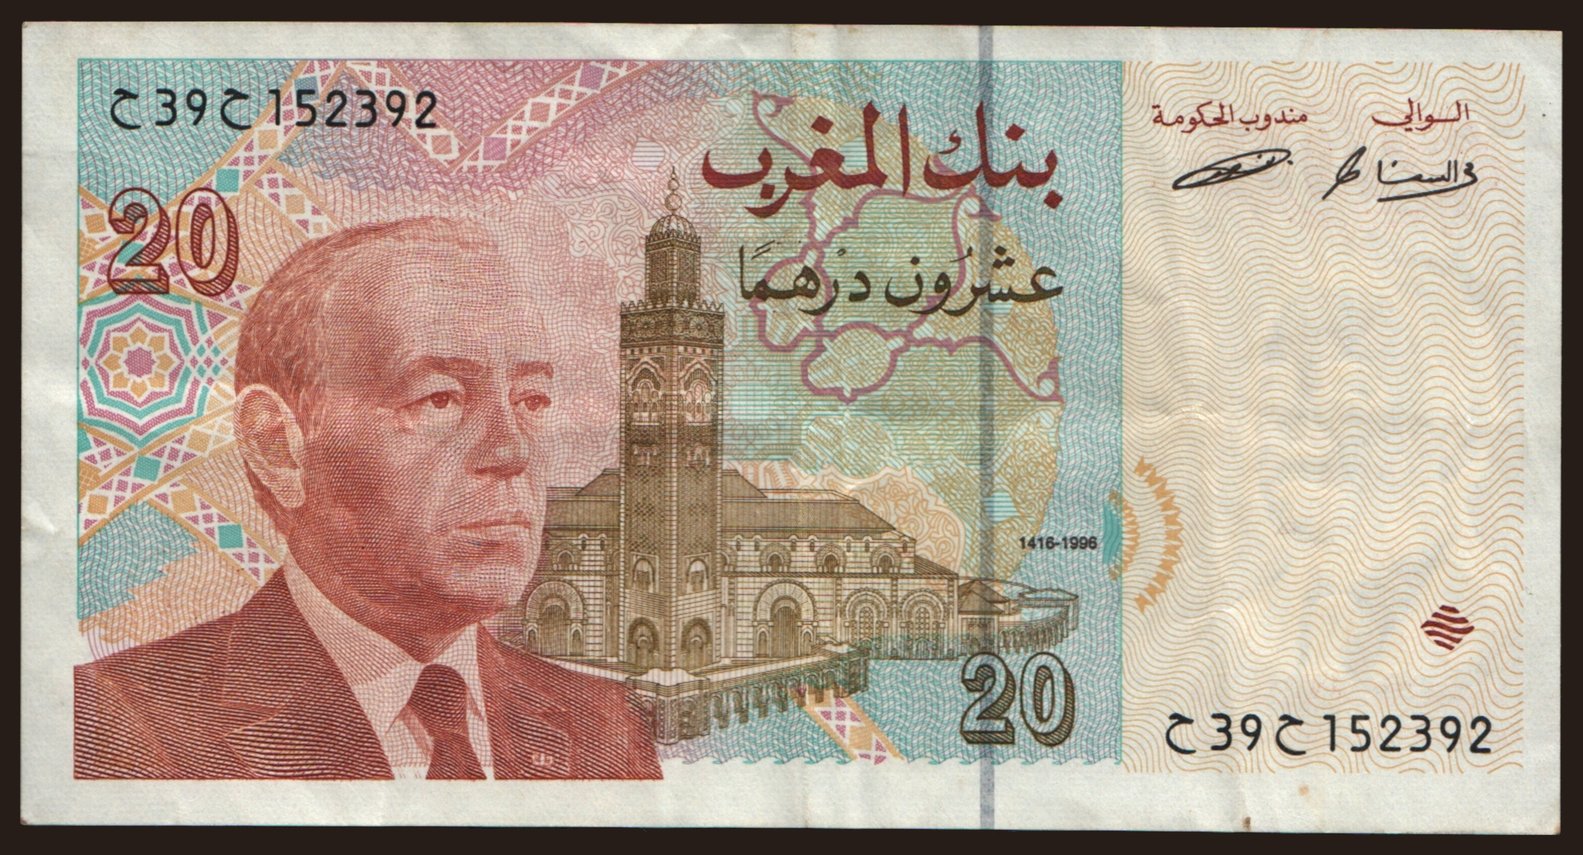 20 dirhams, 1996